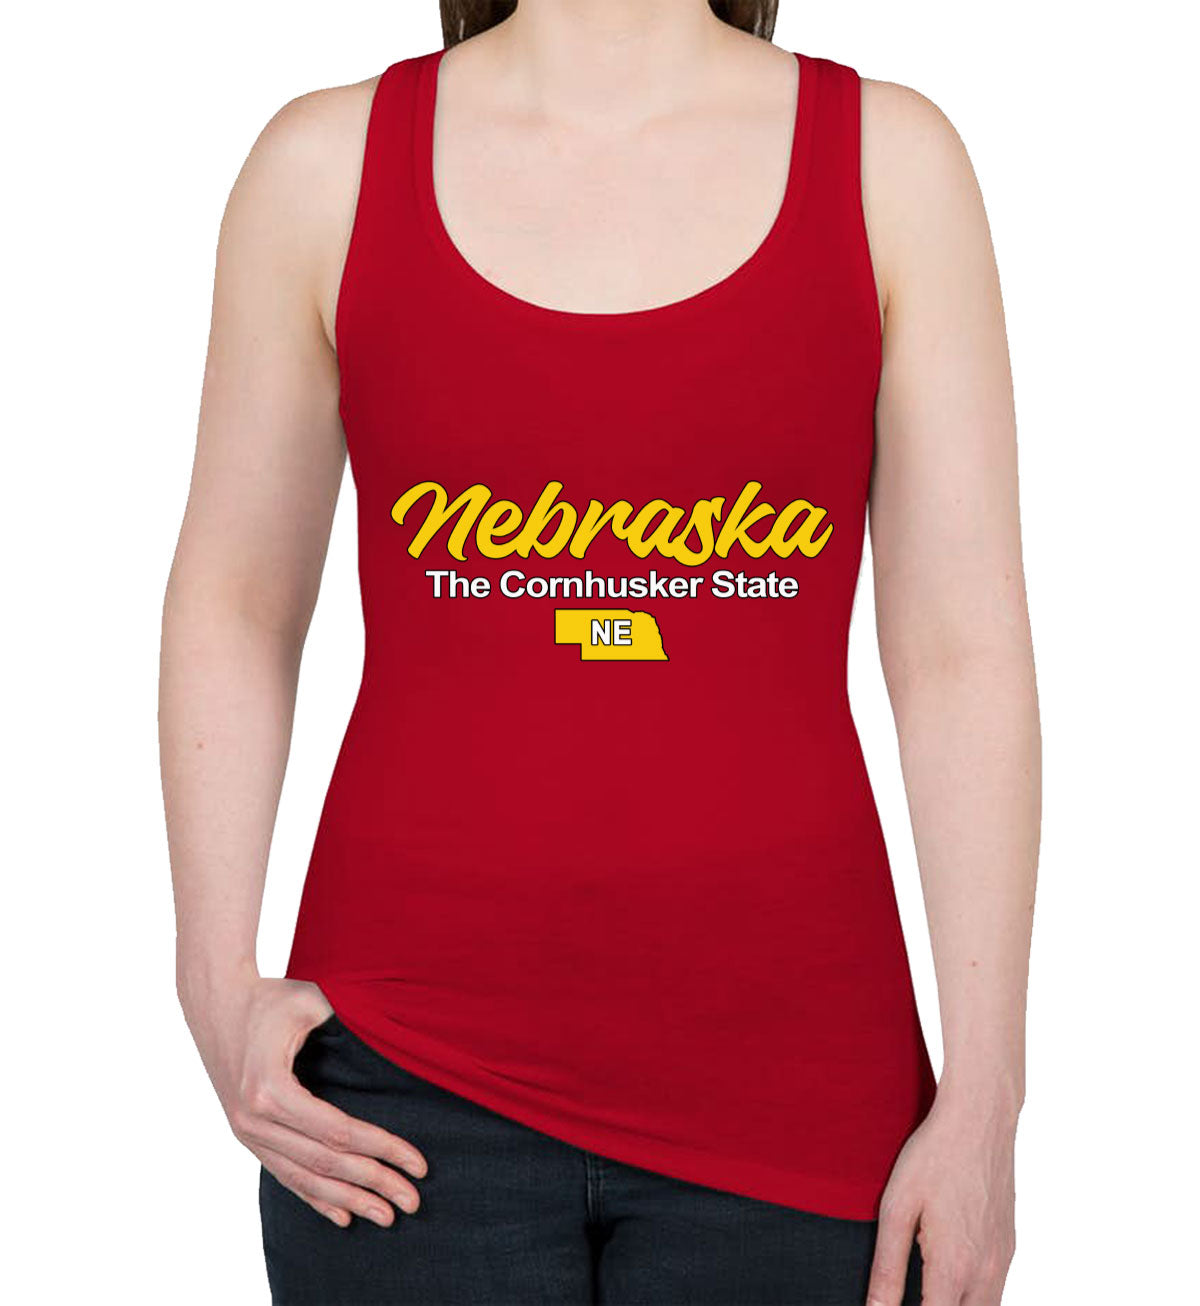 Nebraska The Cornhusker State Women's Racerback Tank Top